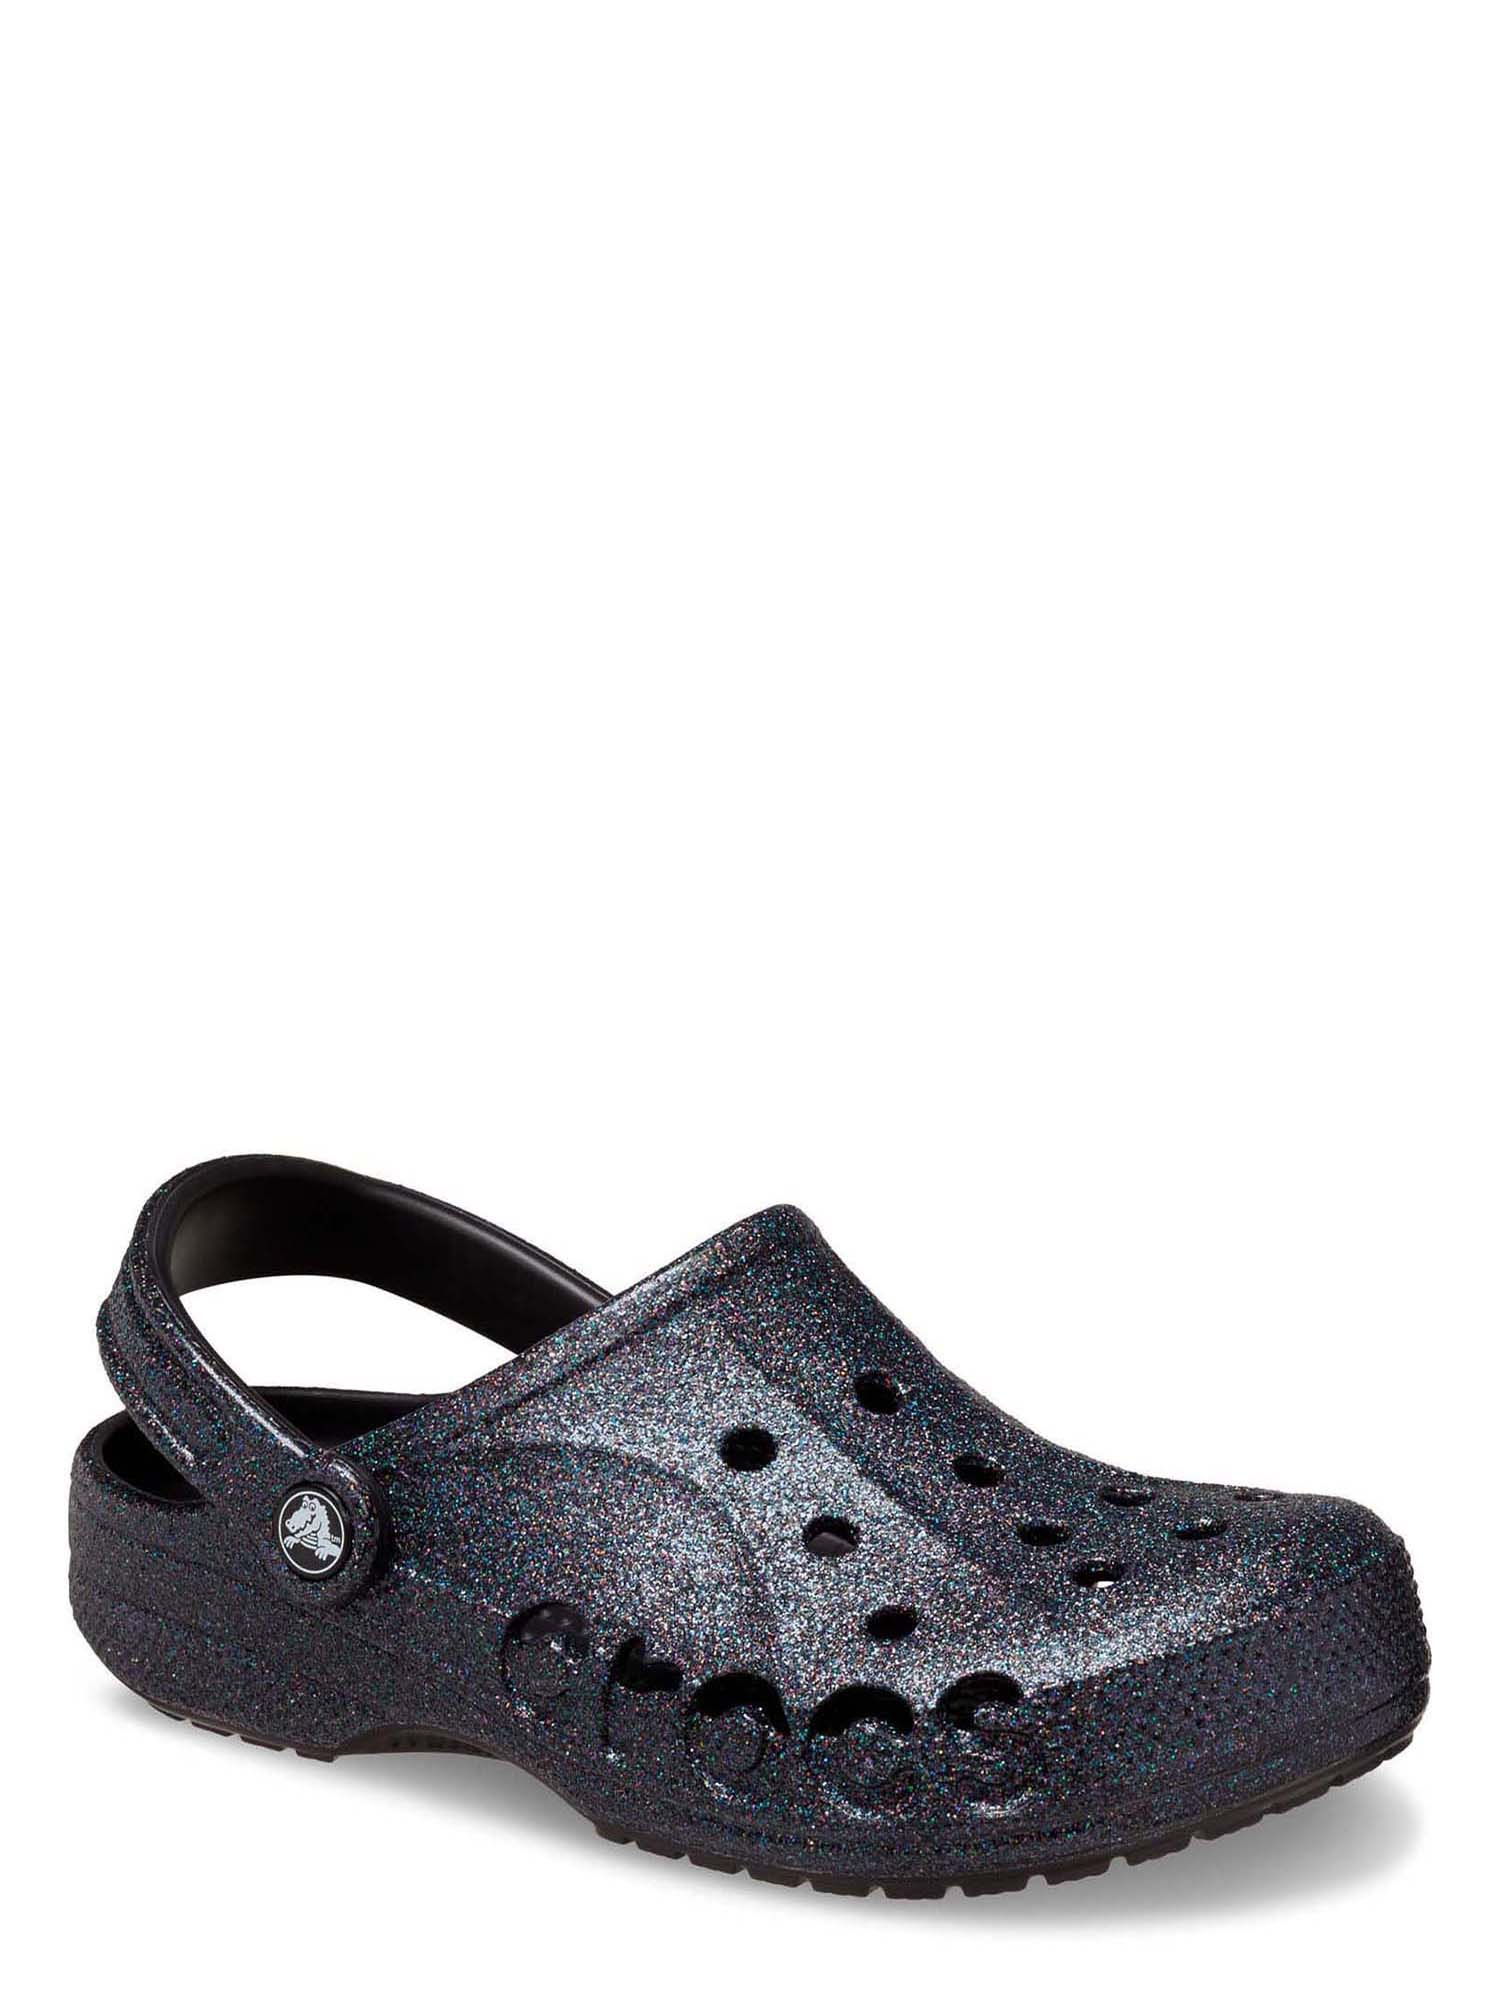 Crocs Unisex Baya Glitter Clog Sandal - image 1 of 7